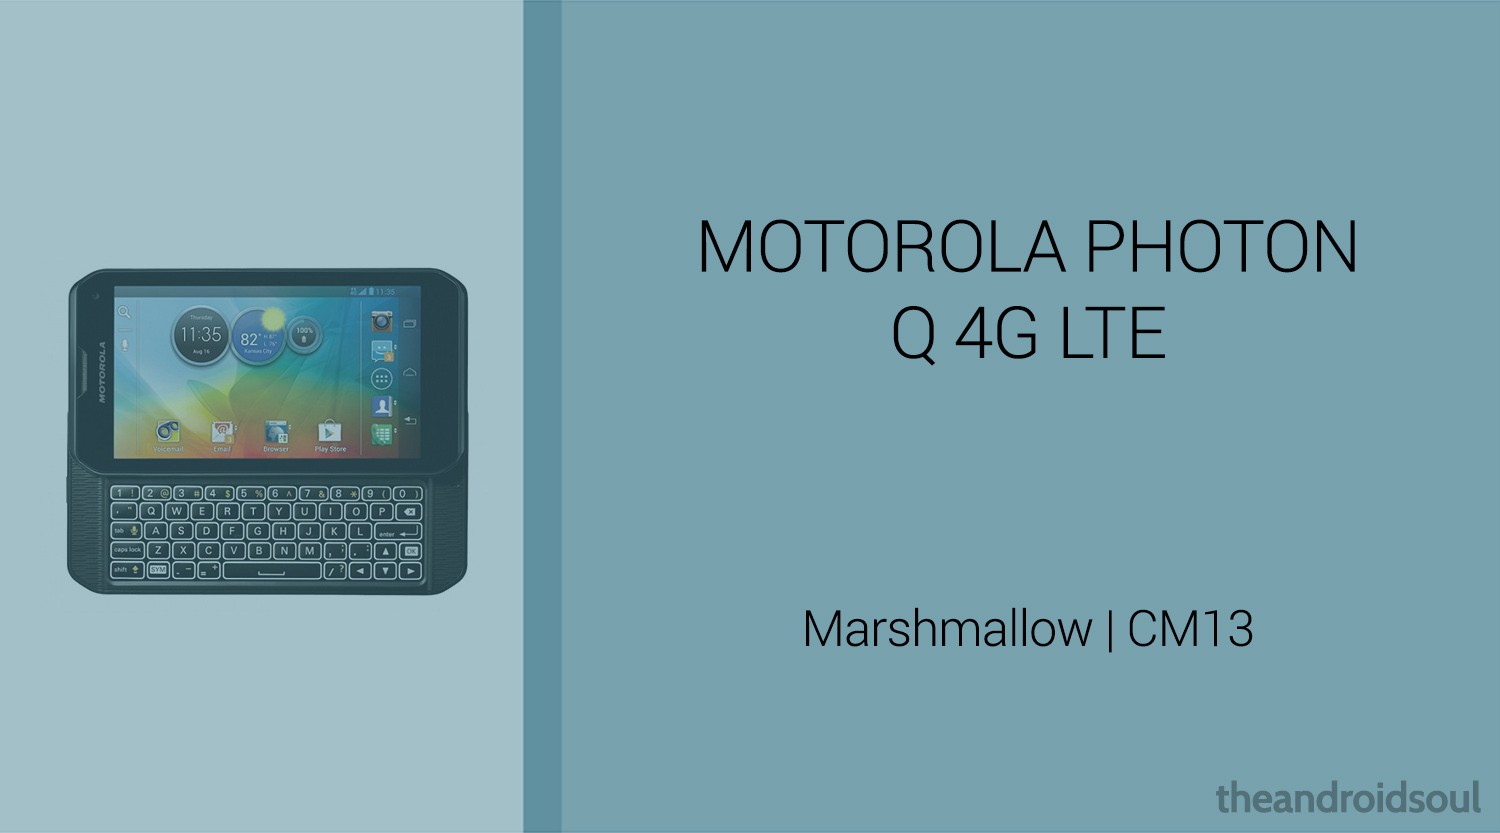 Descargar Motorola Photon Q 4G LTE Marshmallow Update: CM13 y otras ROMs